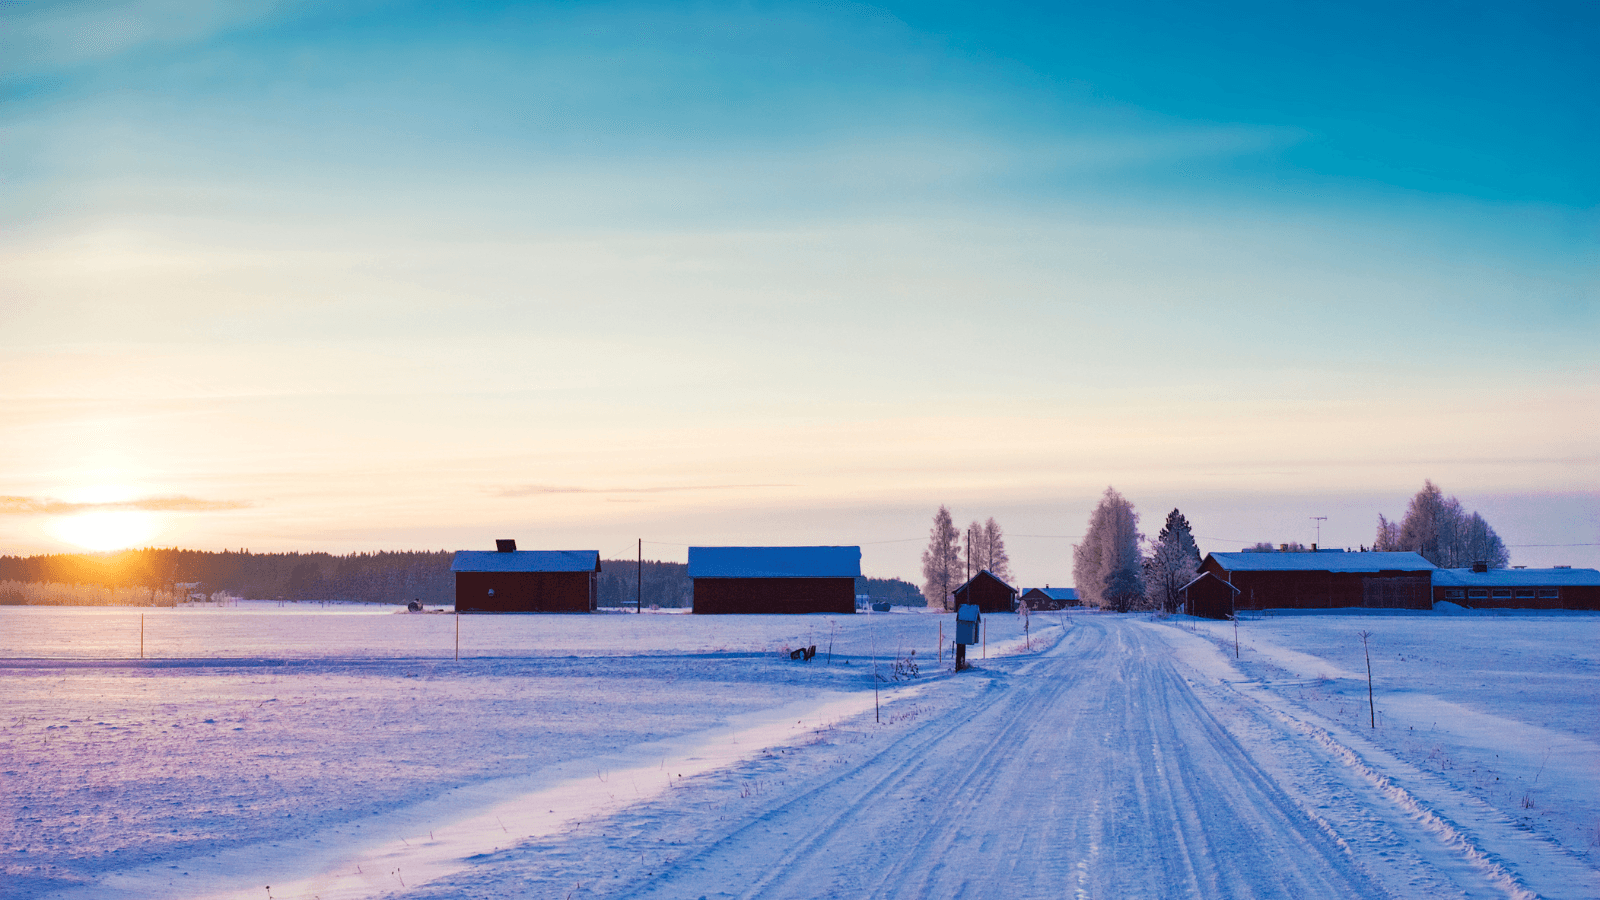 Snowy farm land at sunset